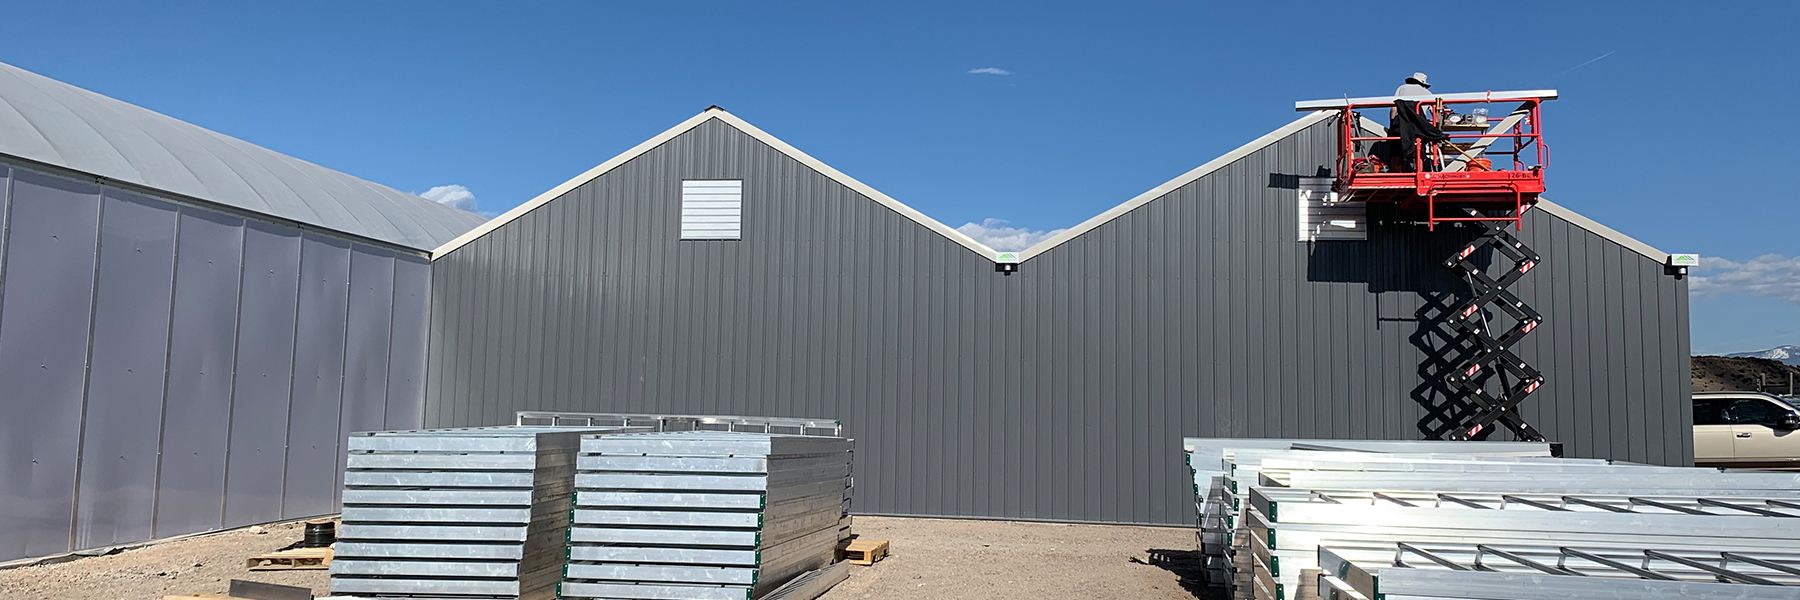 Installing metal frame for metal greenhouses